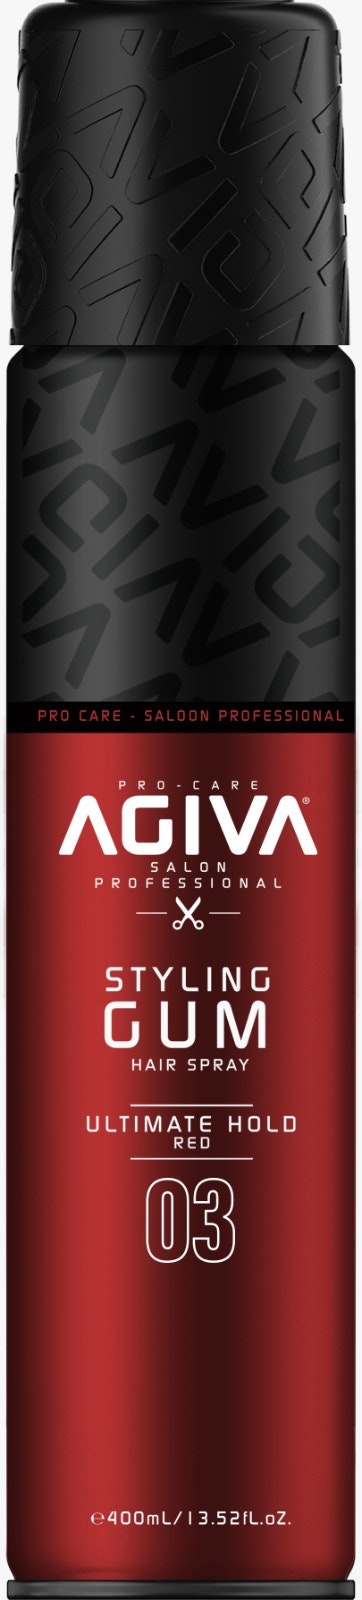 AGIVA -Styling Hair Spray Gum Ultimate Hold Red 03 -  BARBERCITY-Kampaamotukkuliike, jolla on kaikki